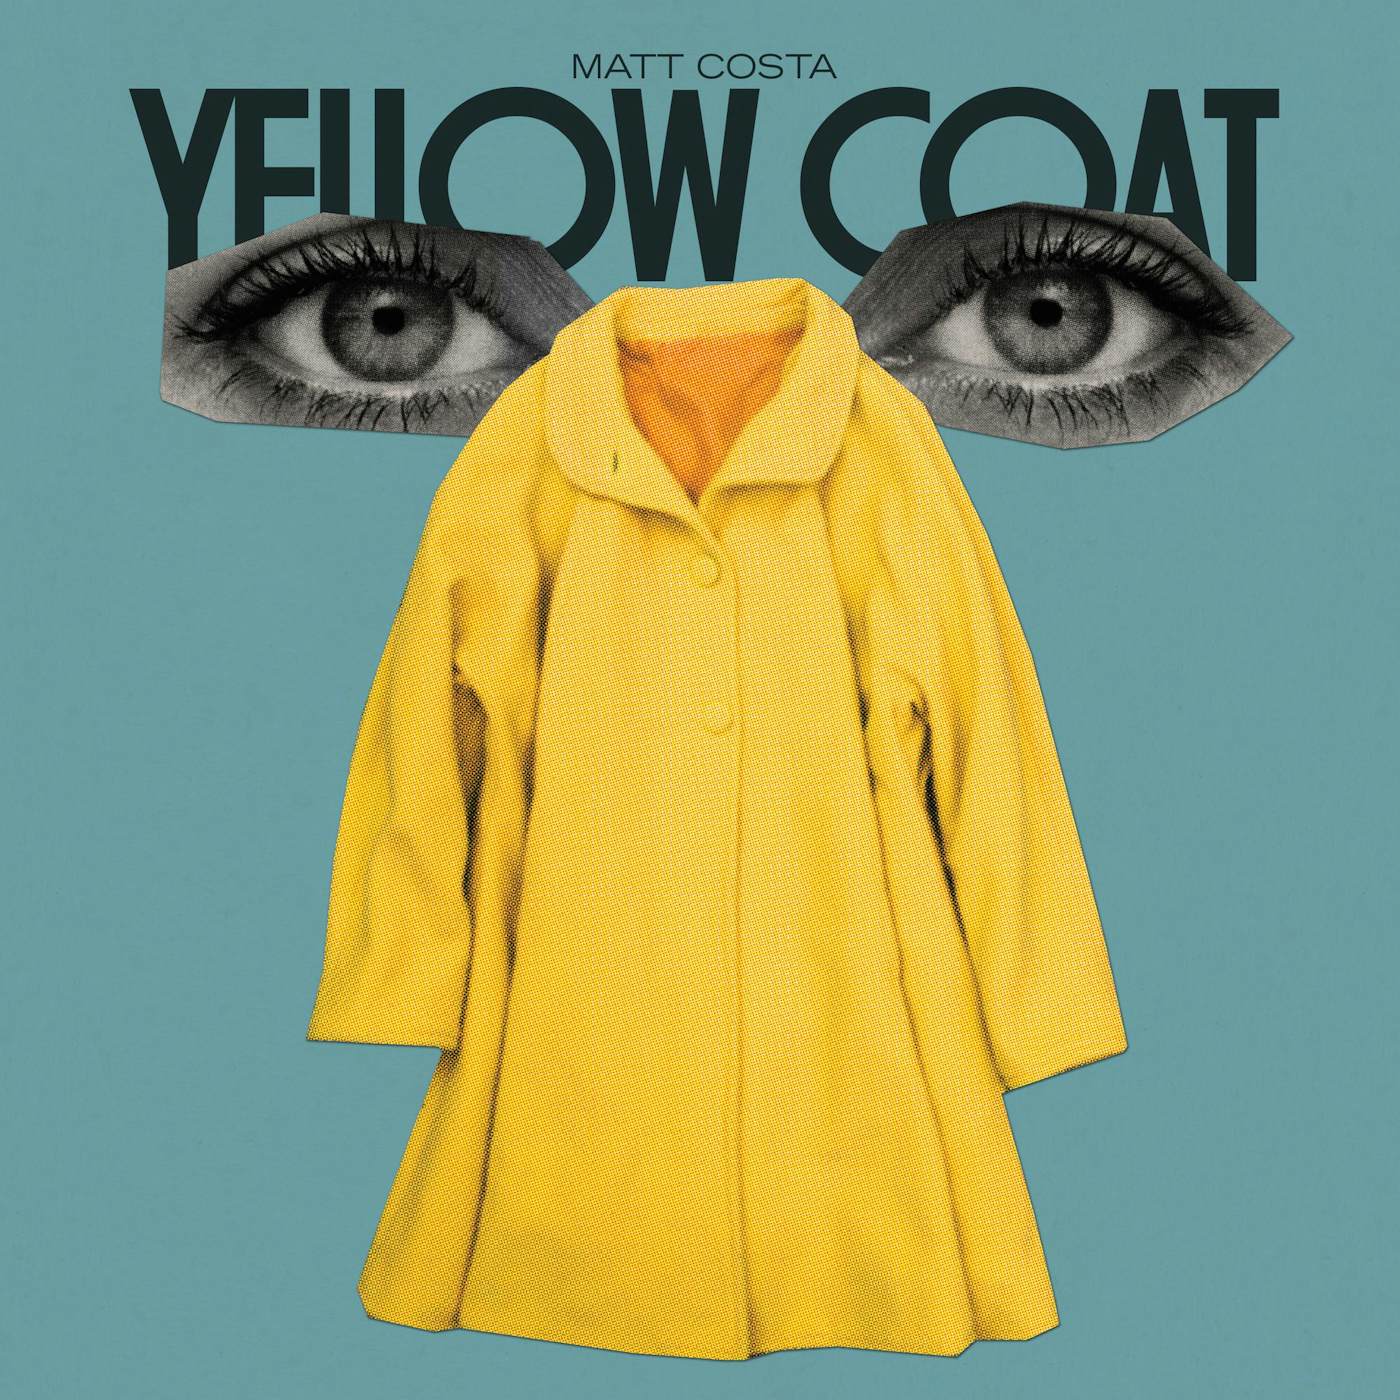 Matt Costa Yellow Coat Vinyl Record